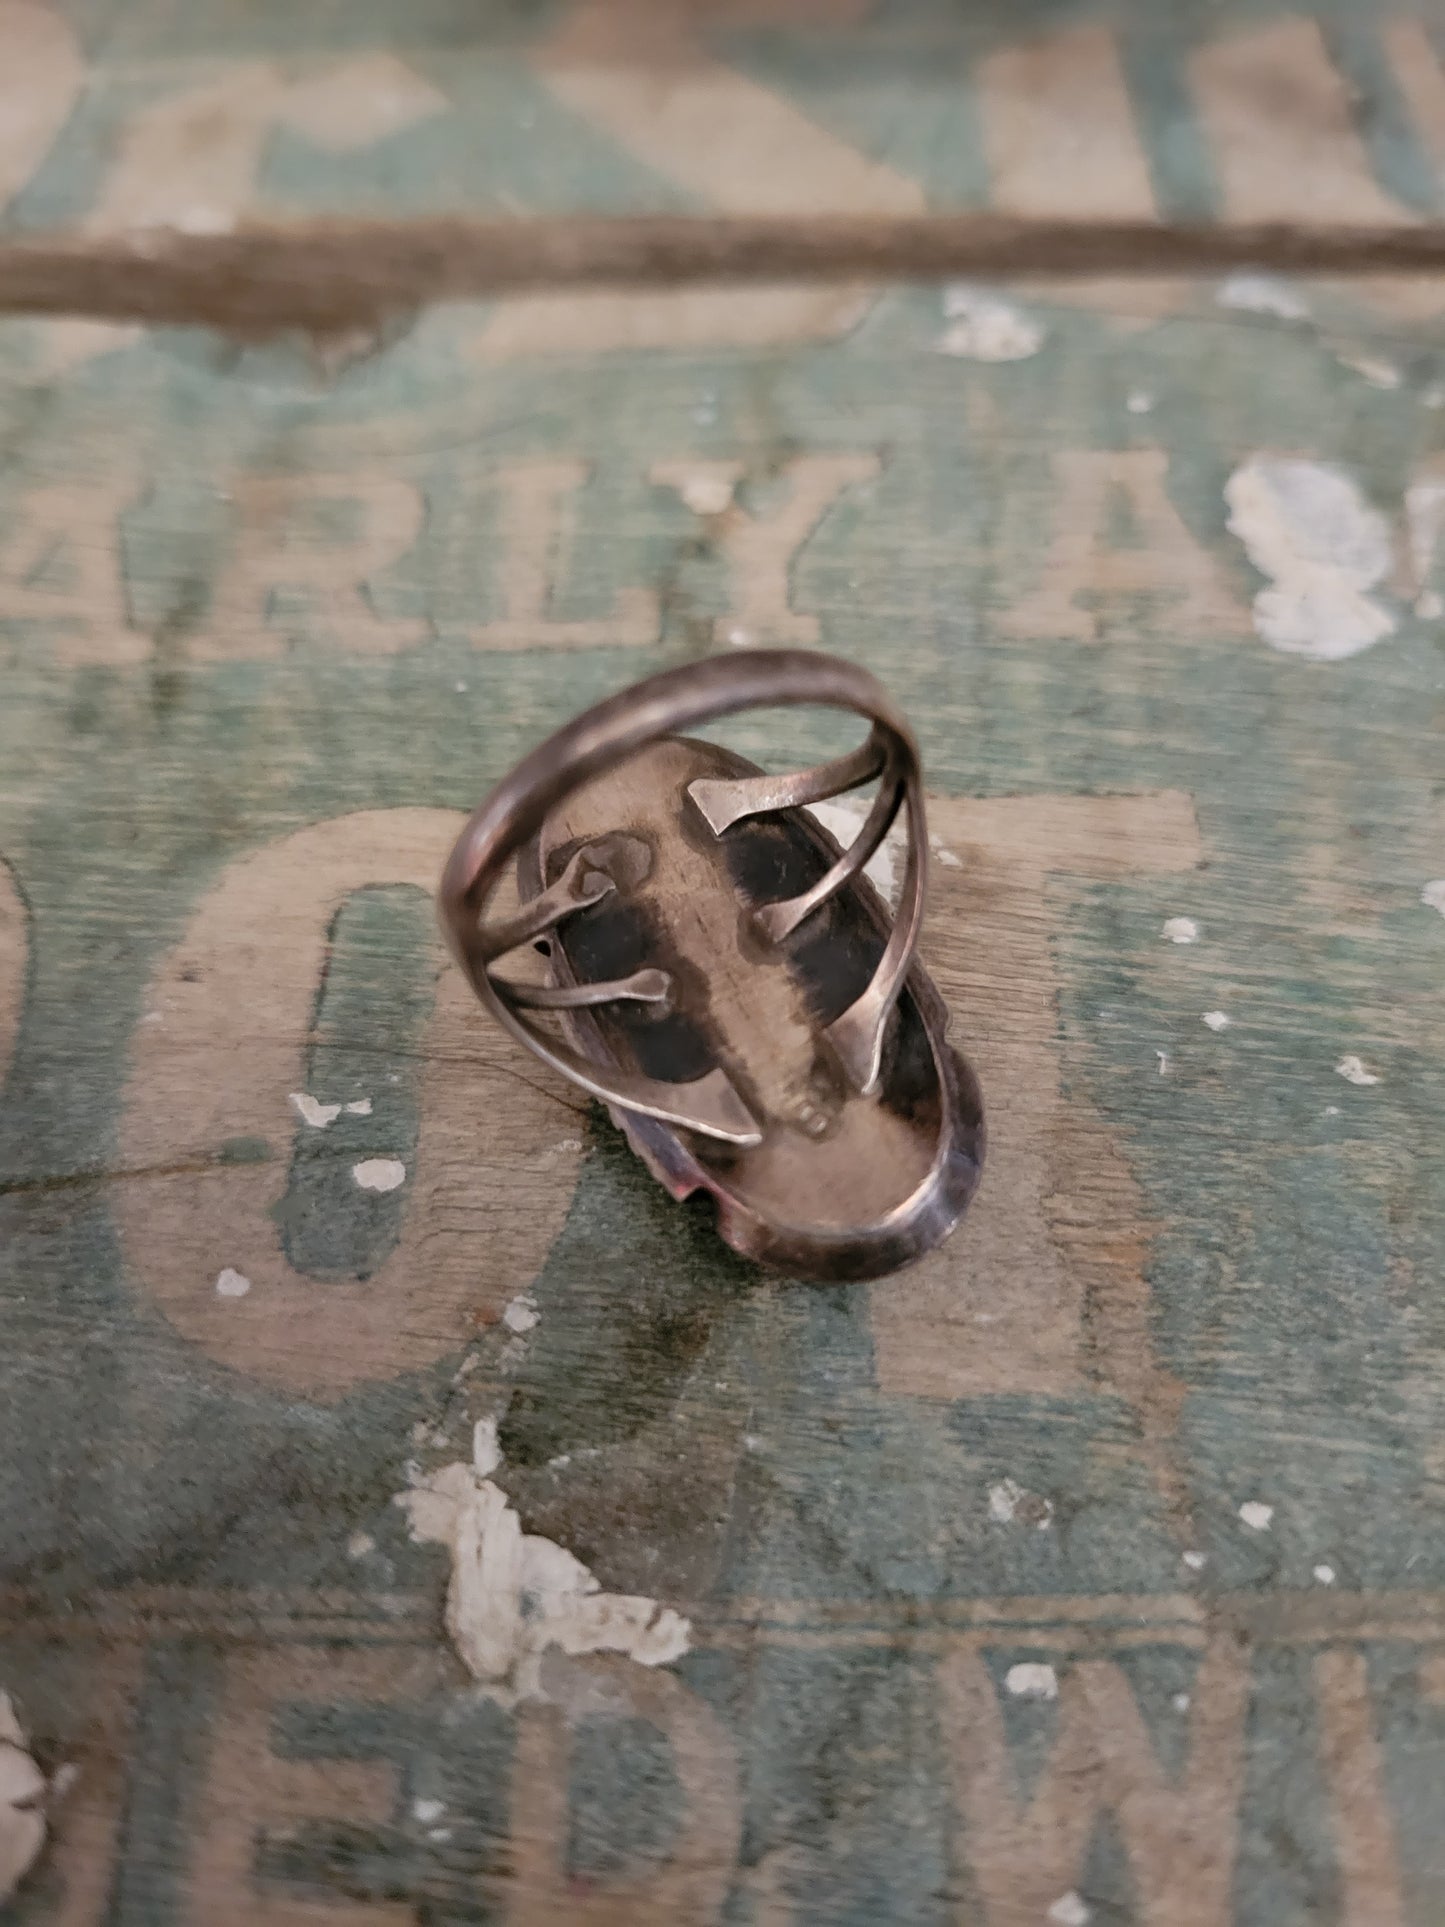 Vintage Malachite Ring